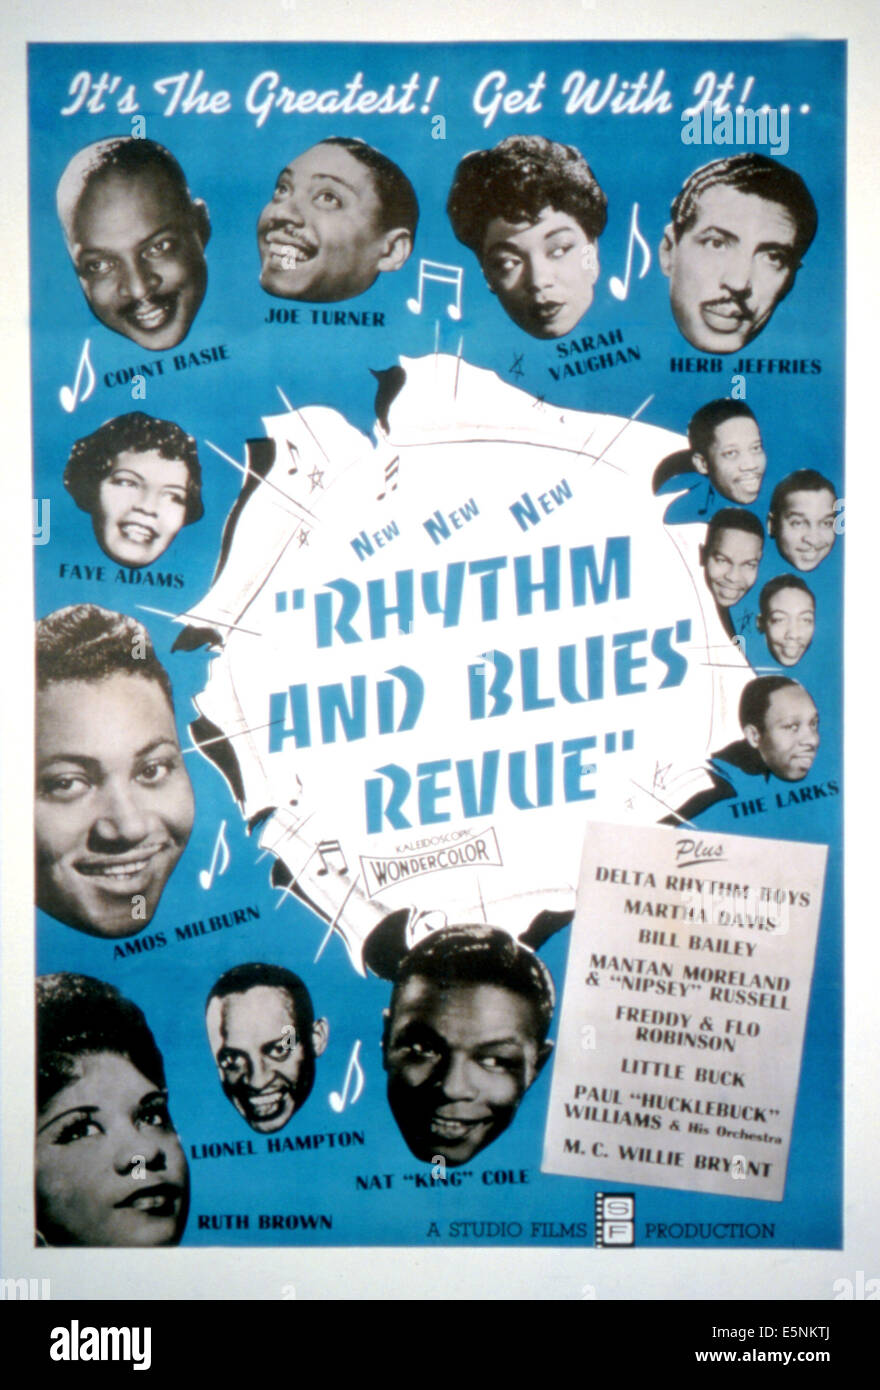 RHYTHM AND BLUES REVUE, Count Basie, Joe Turner, Sarah Vaughan, Herb Jeffries, Faye Adams, Amos Milburn, The Larks, Ruth Brown, Stock Photo